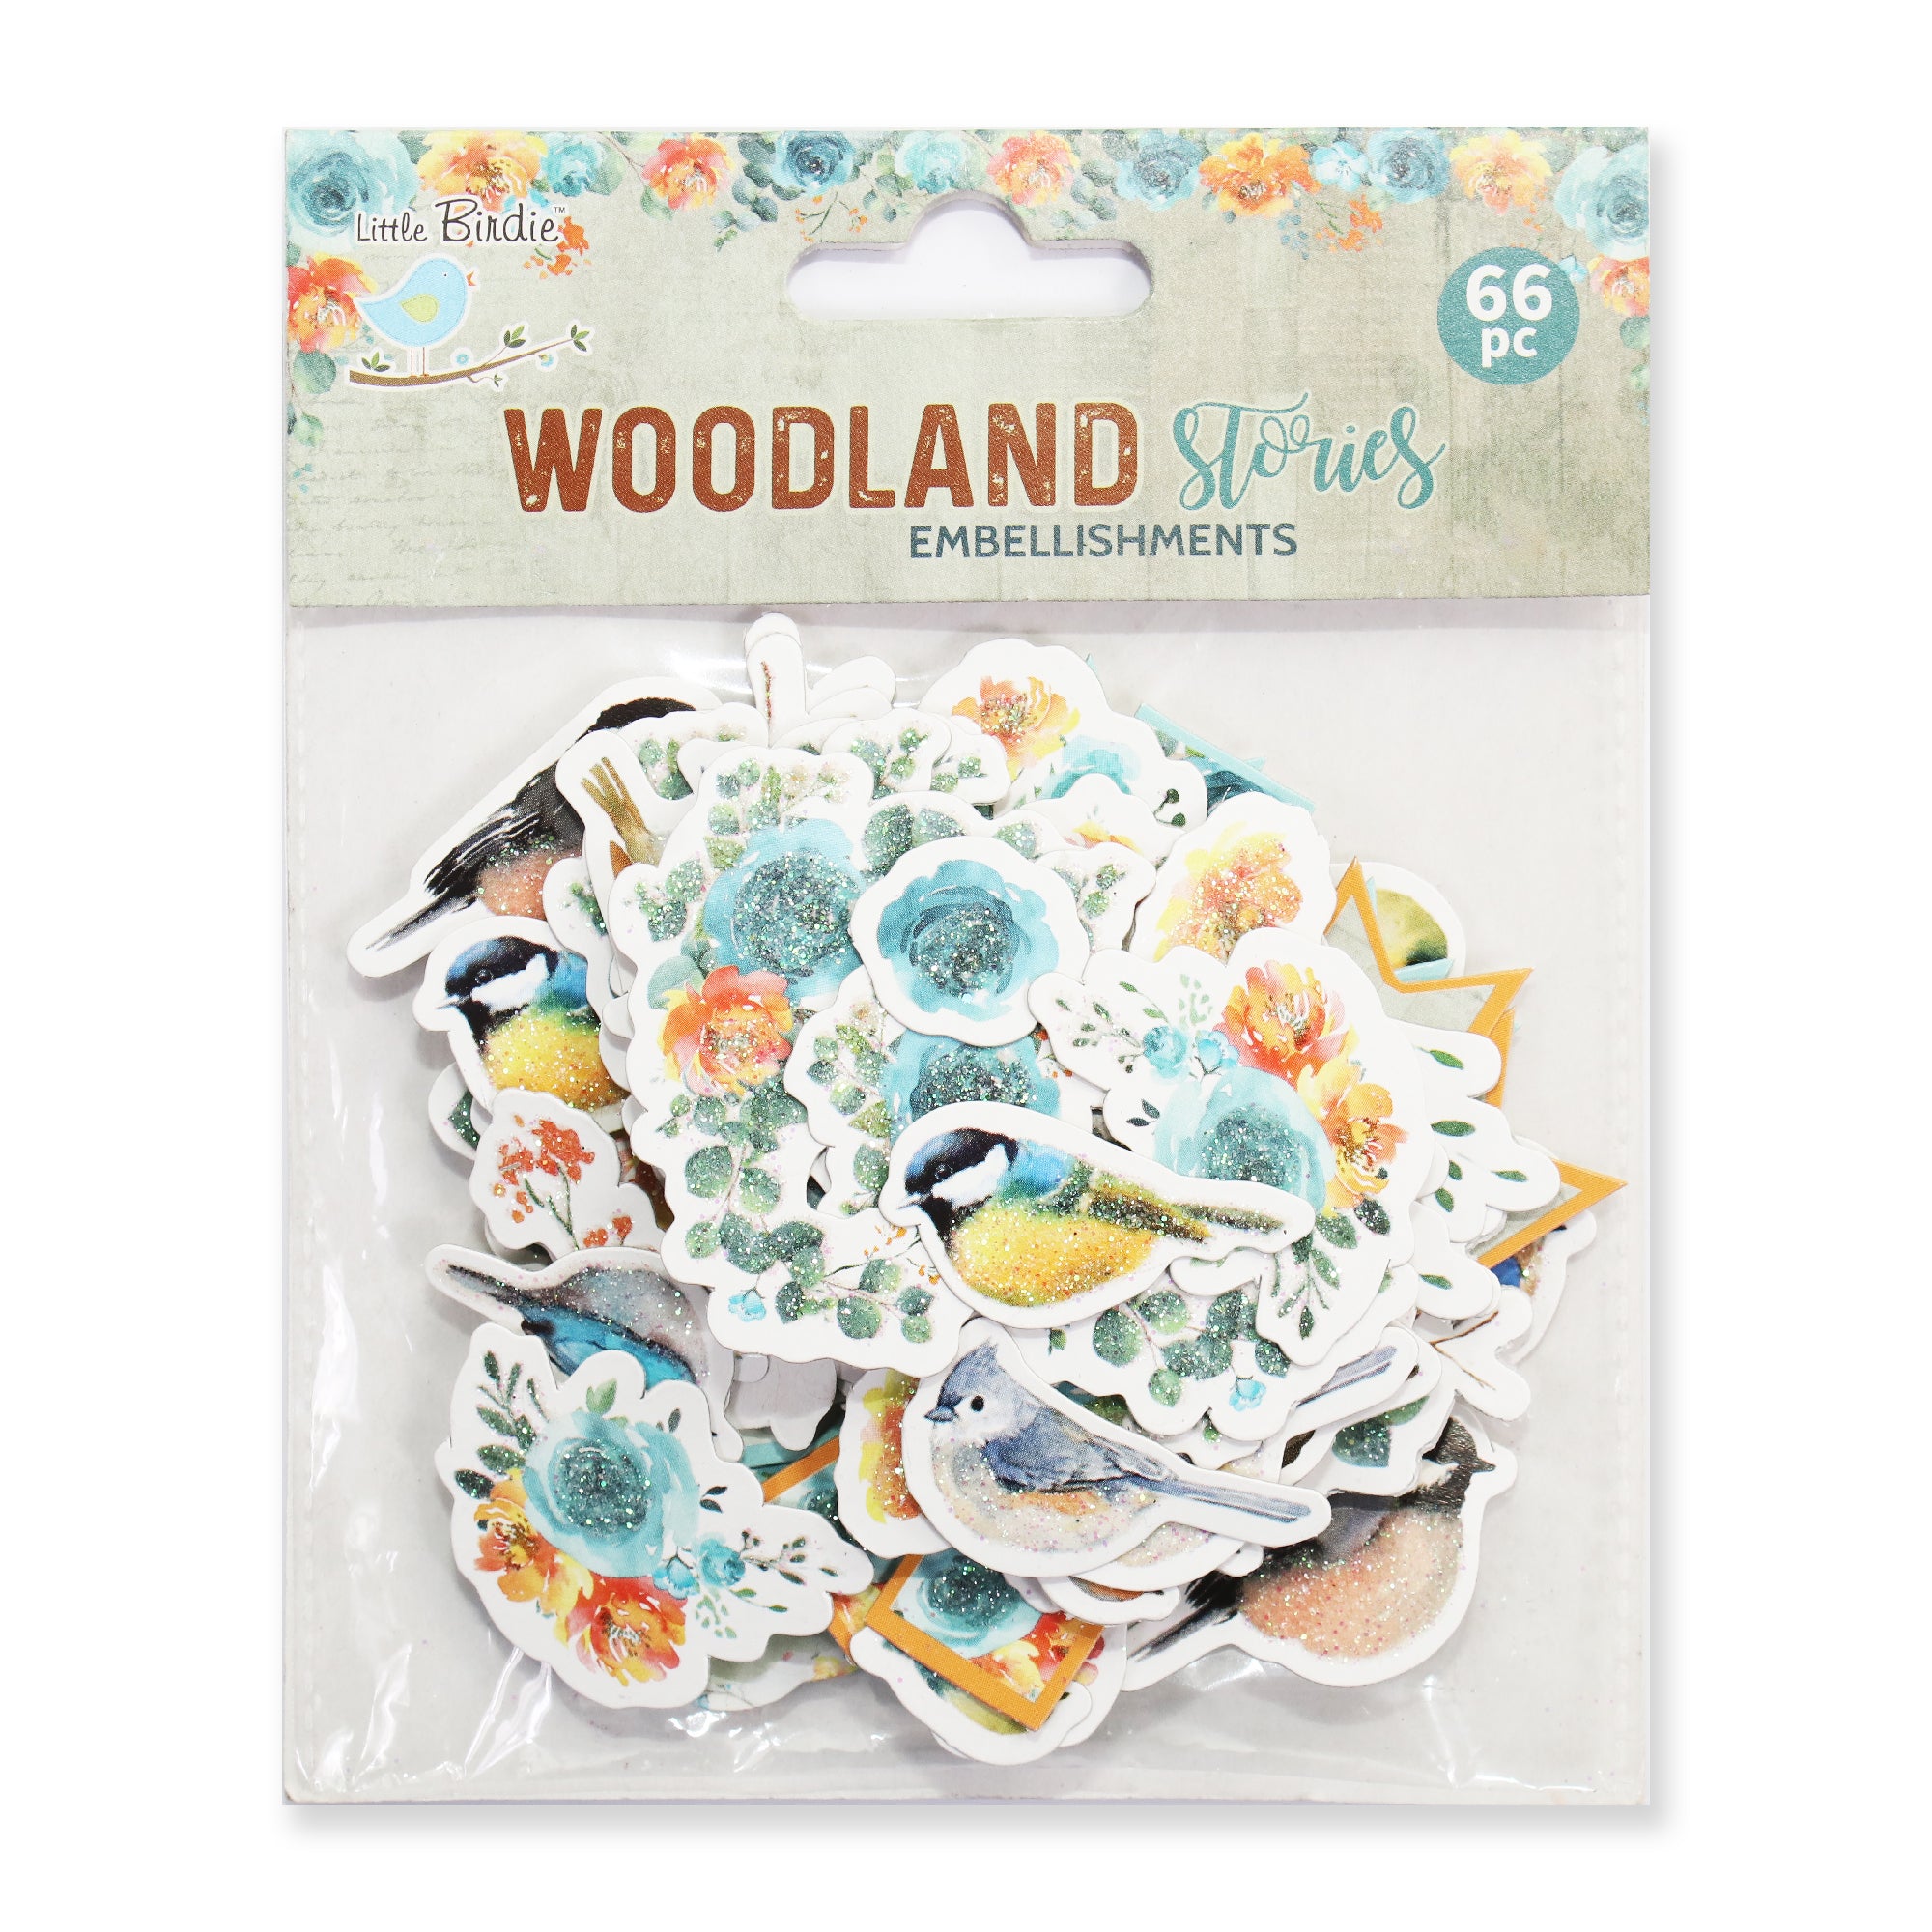 Woodland Stories Ephemera Stickers 66pcs